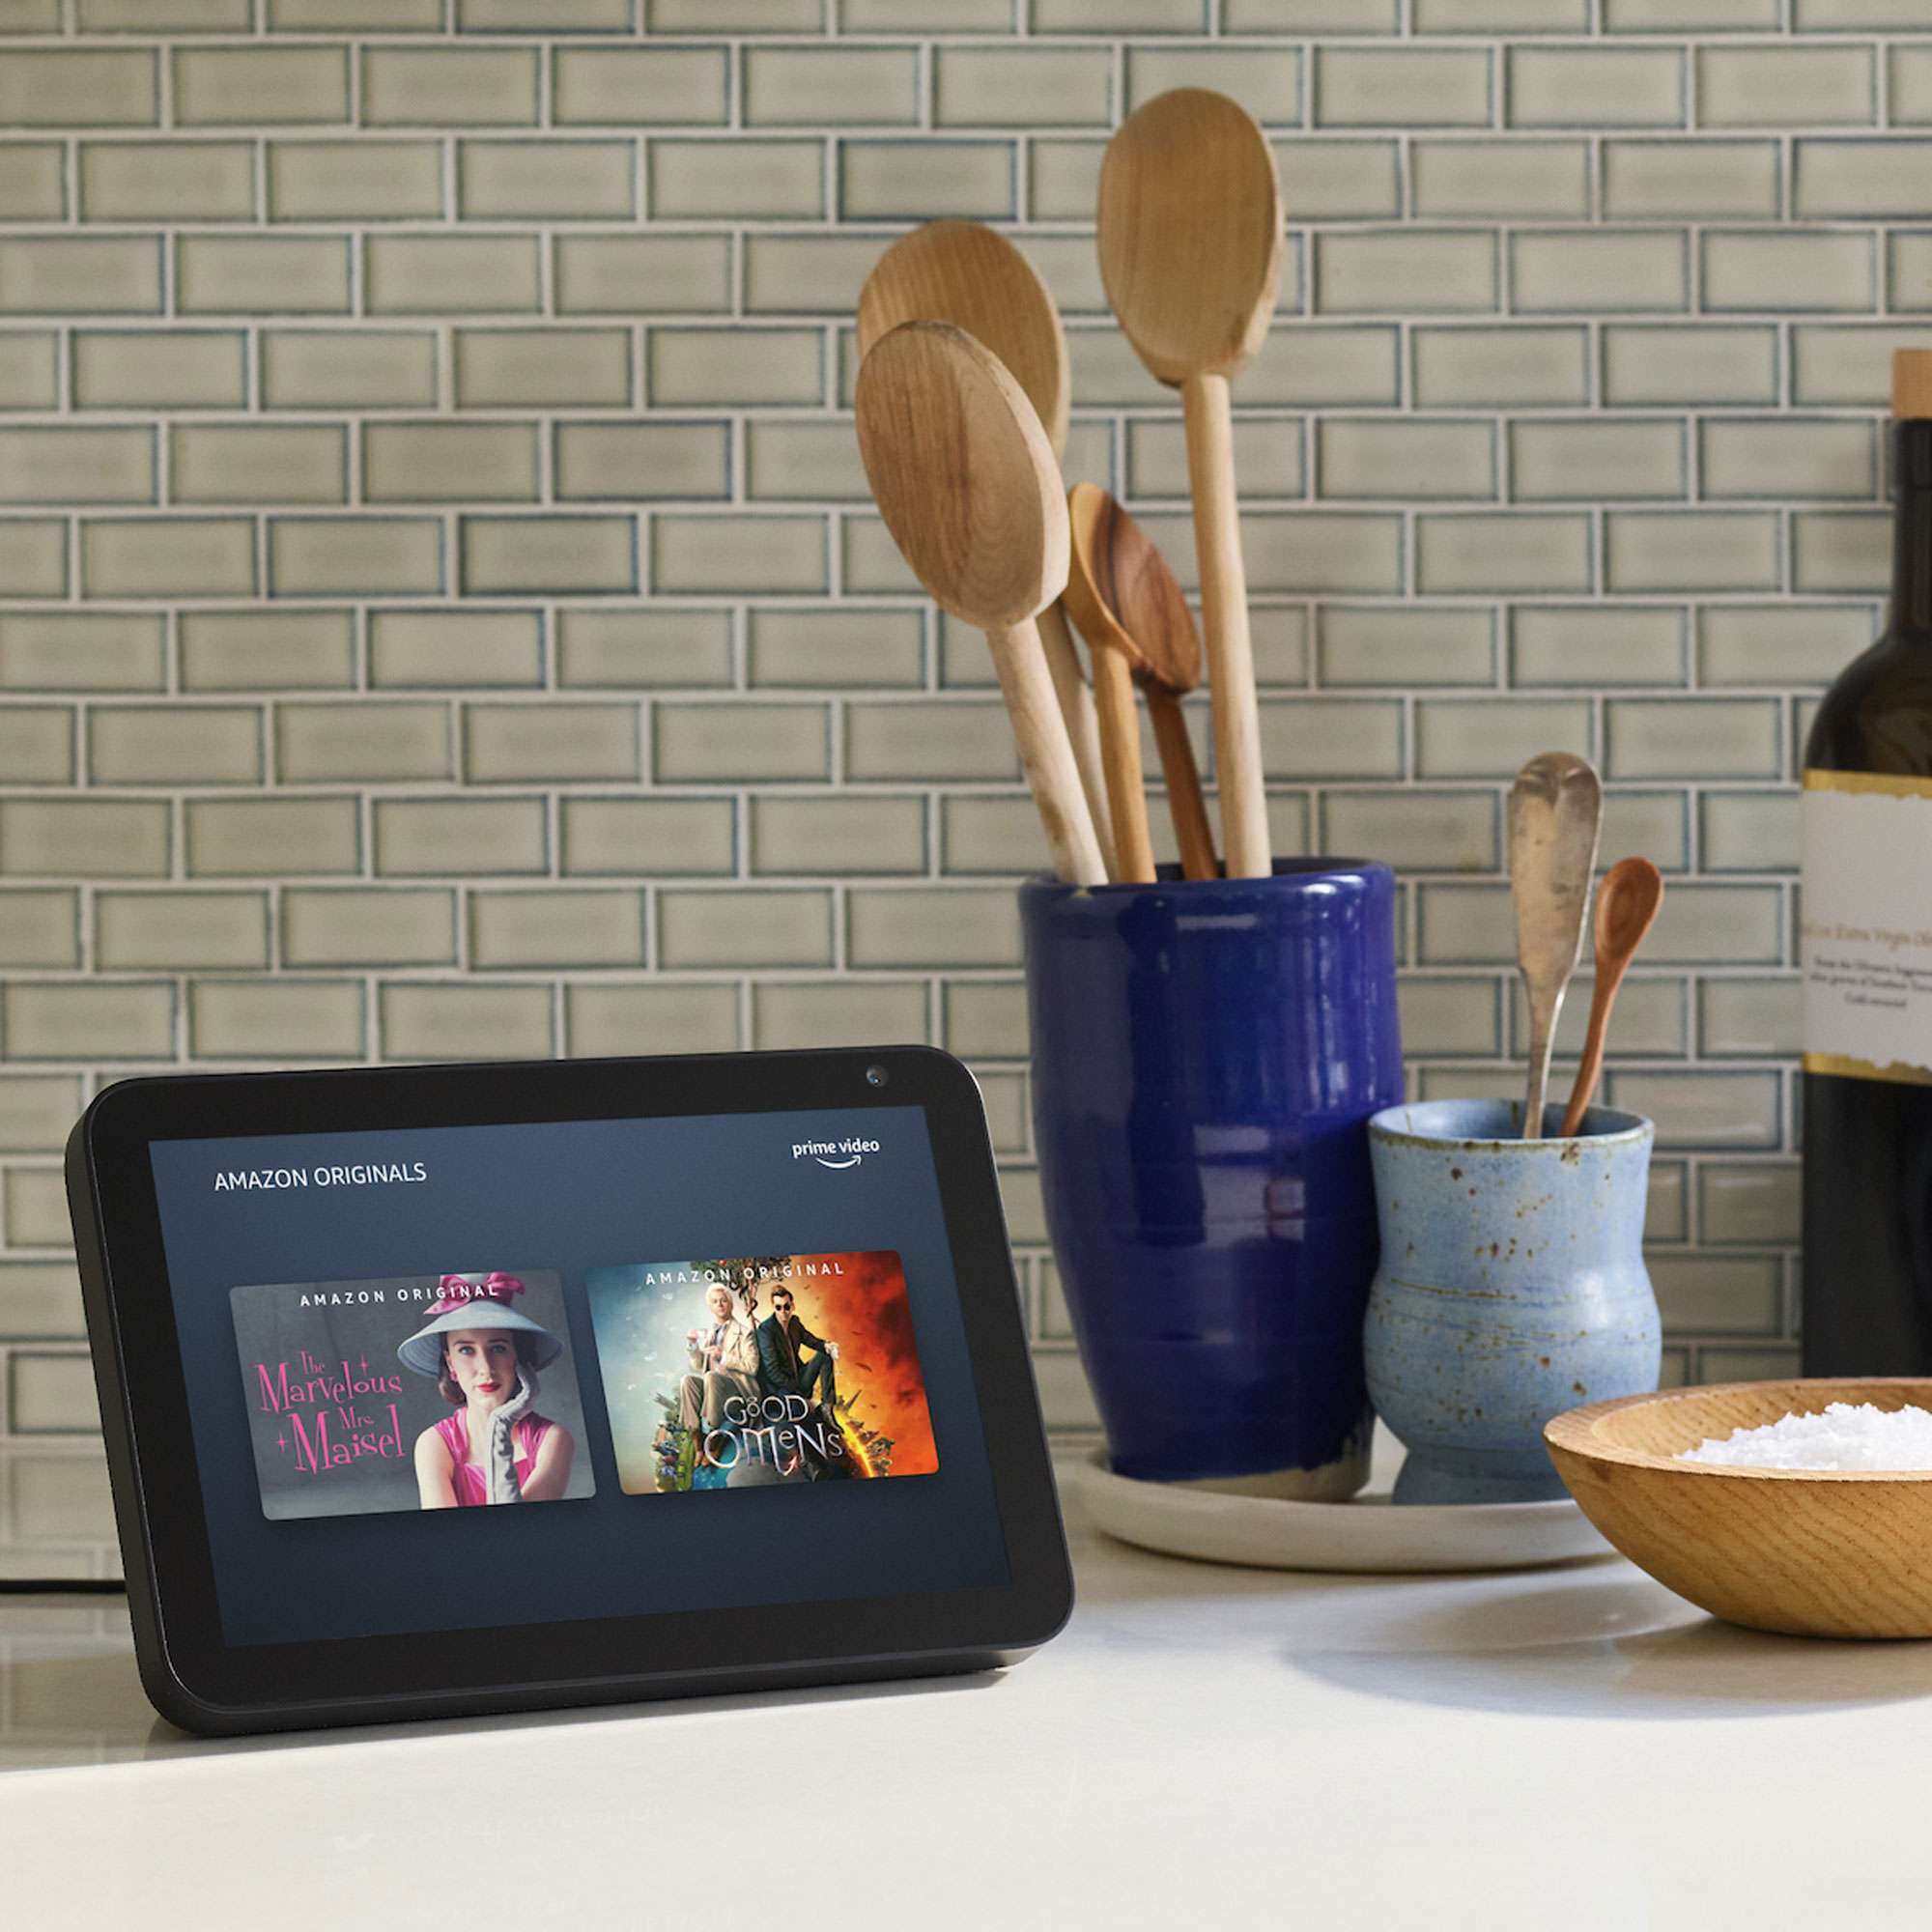 Amazon Alexa Eco Show smart speaker hub with screen on a kitchen countertop